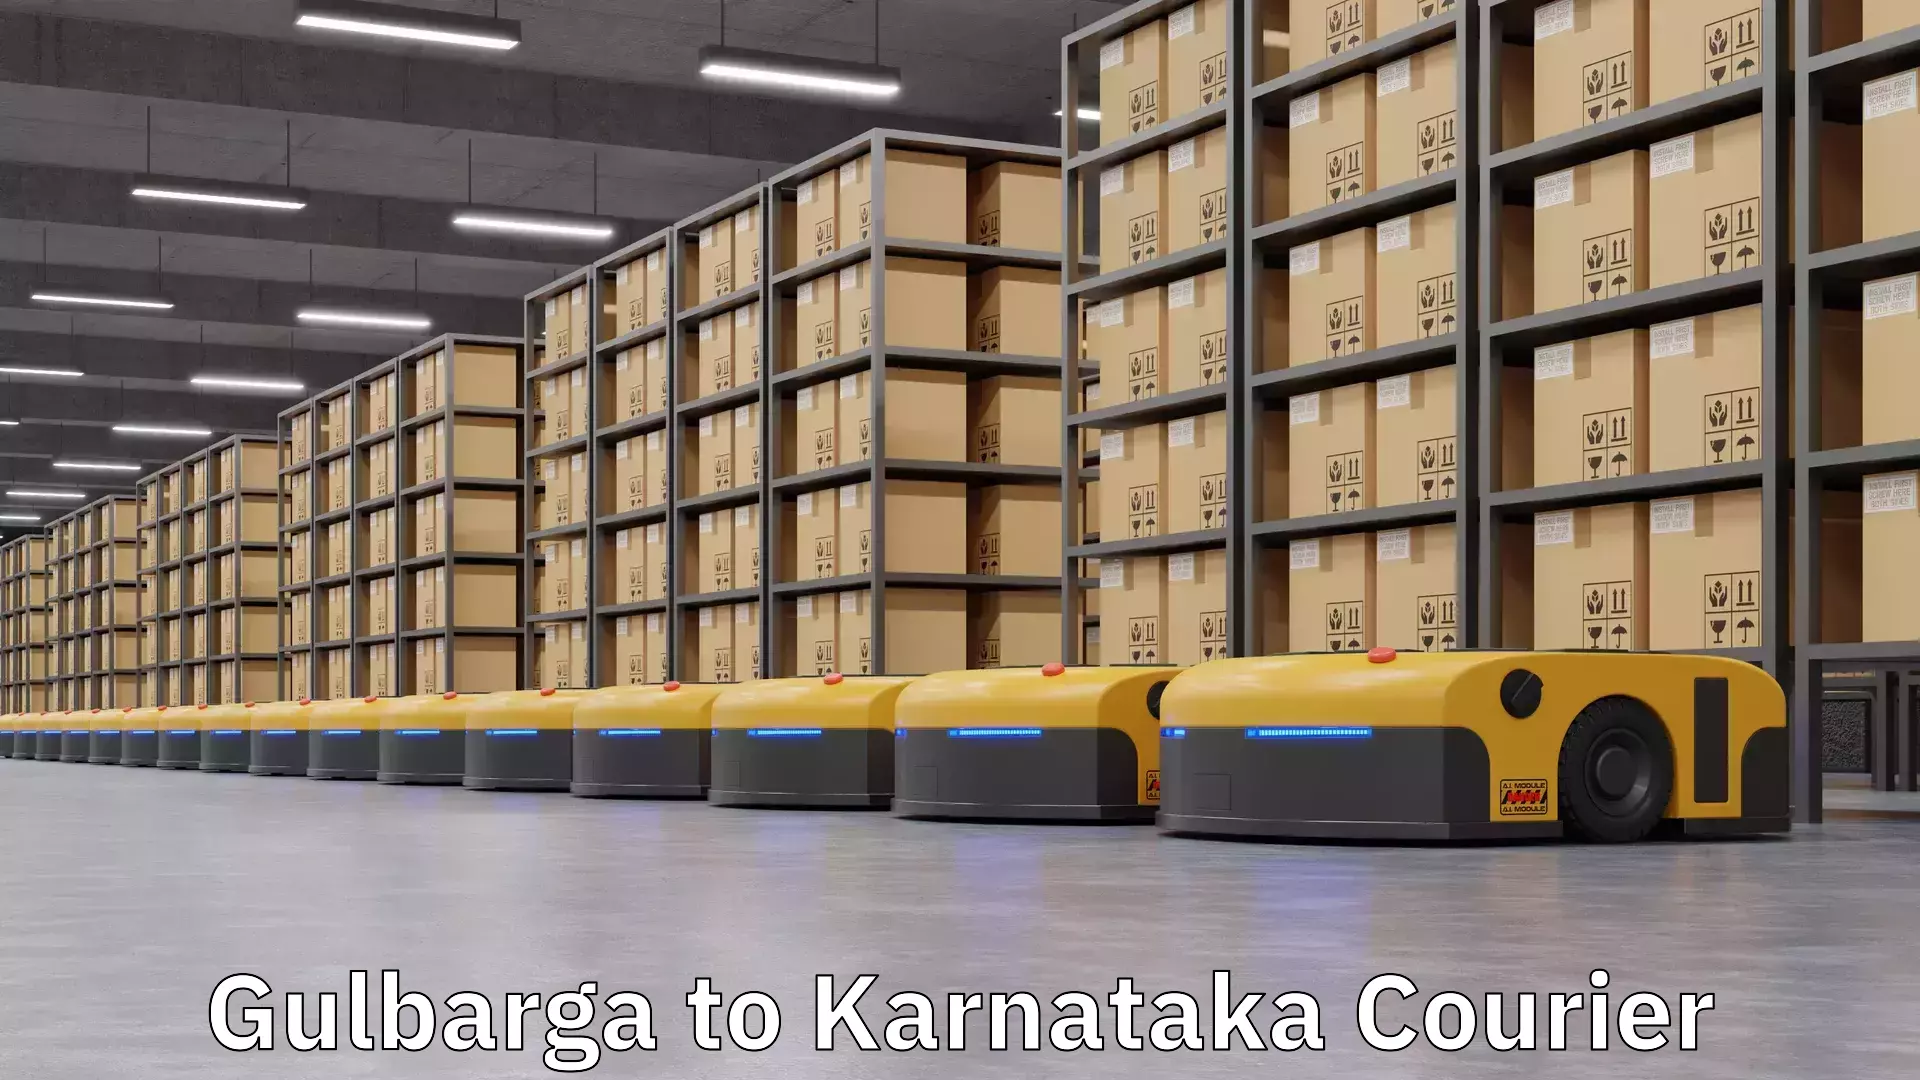 Logistics service provider Gulbarga to Karnataka